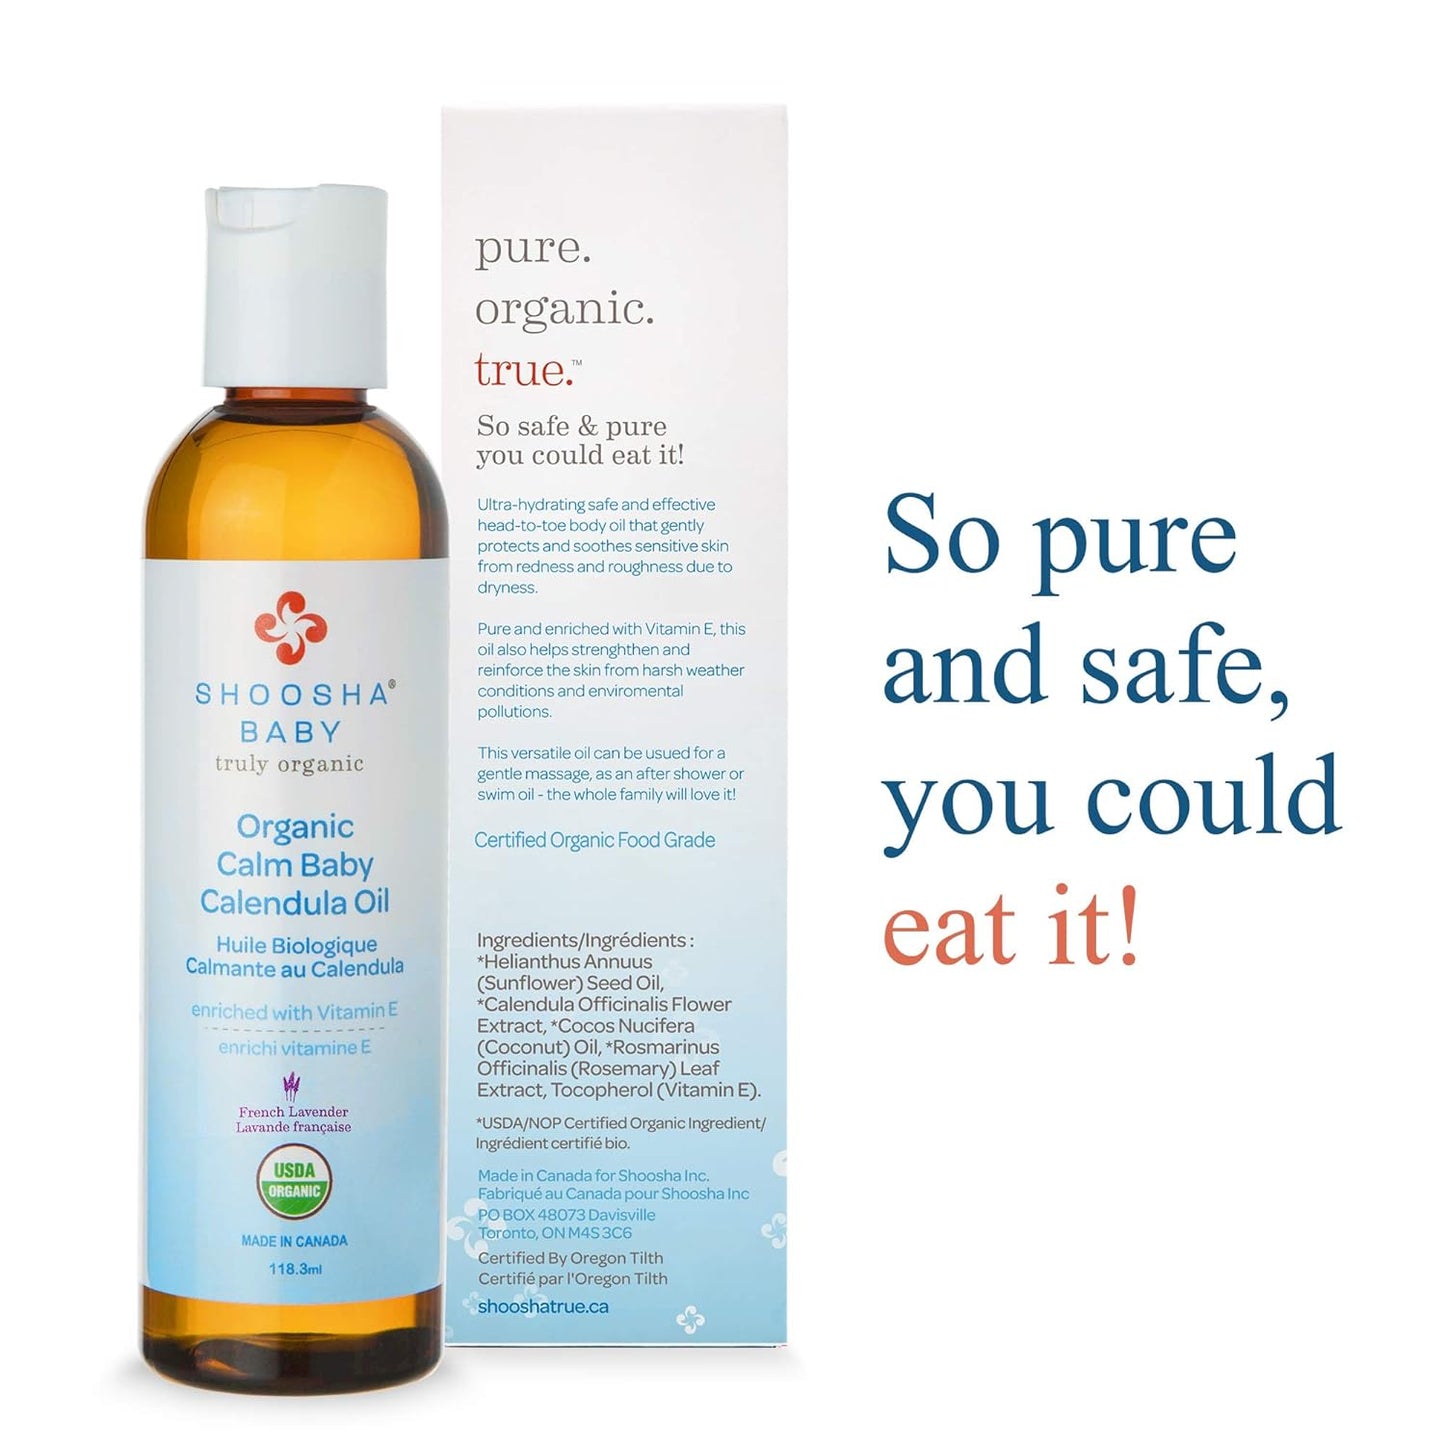 Shoosha Organic Calendula Oil French Lavender, for Babies, Real Calendula Oil, Calendula Massage Oil Moisturizer, Hypoallergenic, Gluten-Free, 100% Biodegradable